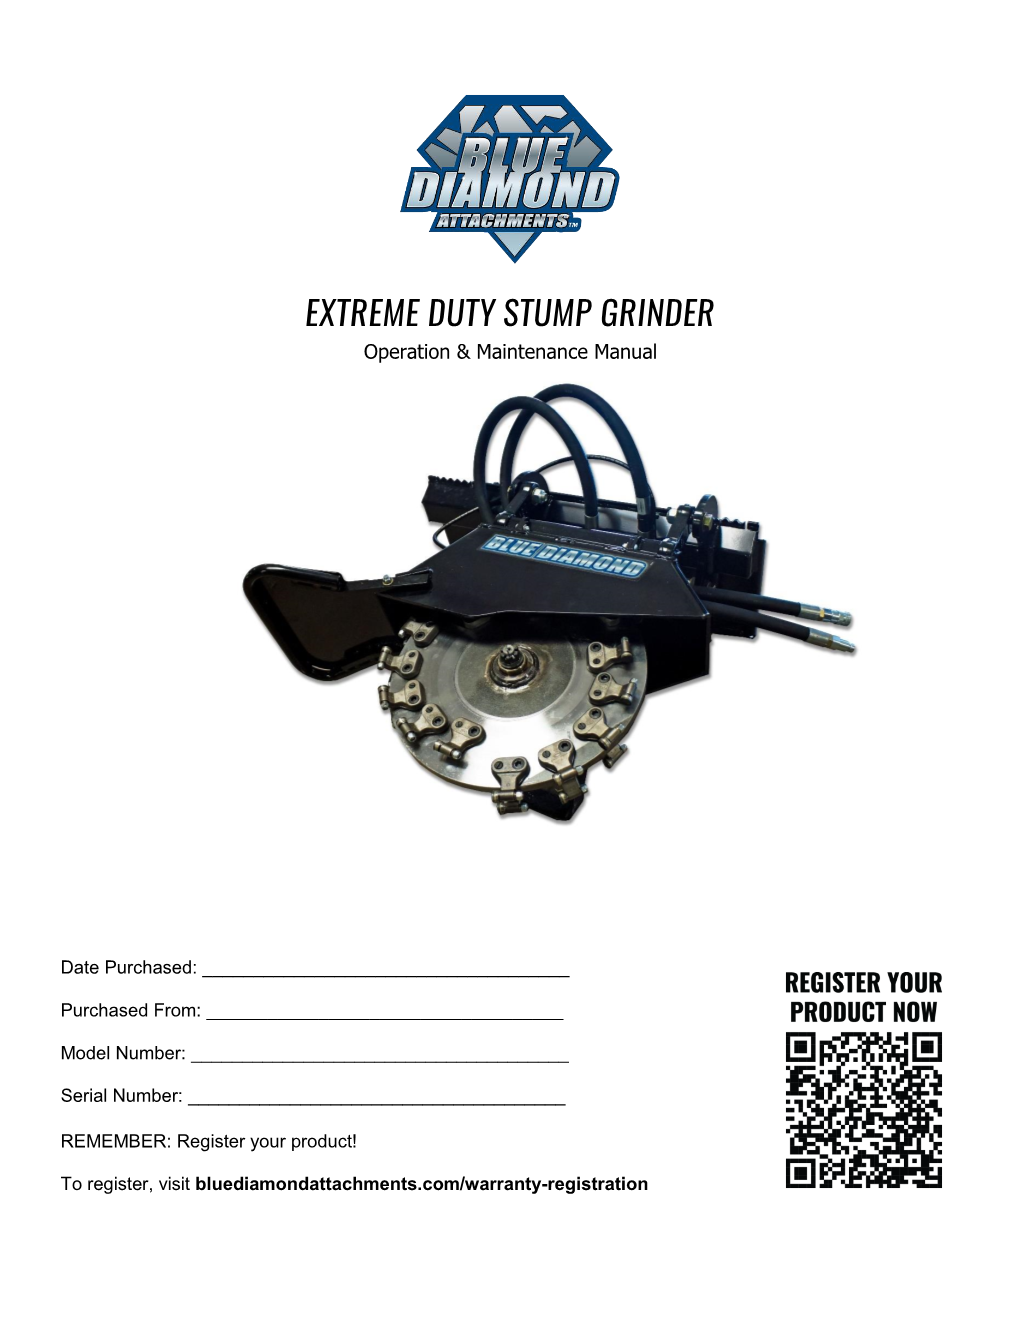 EXTREME DUTY STUMP GRINDER Operation & Maintenance Manual